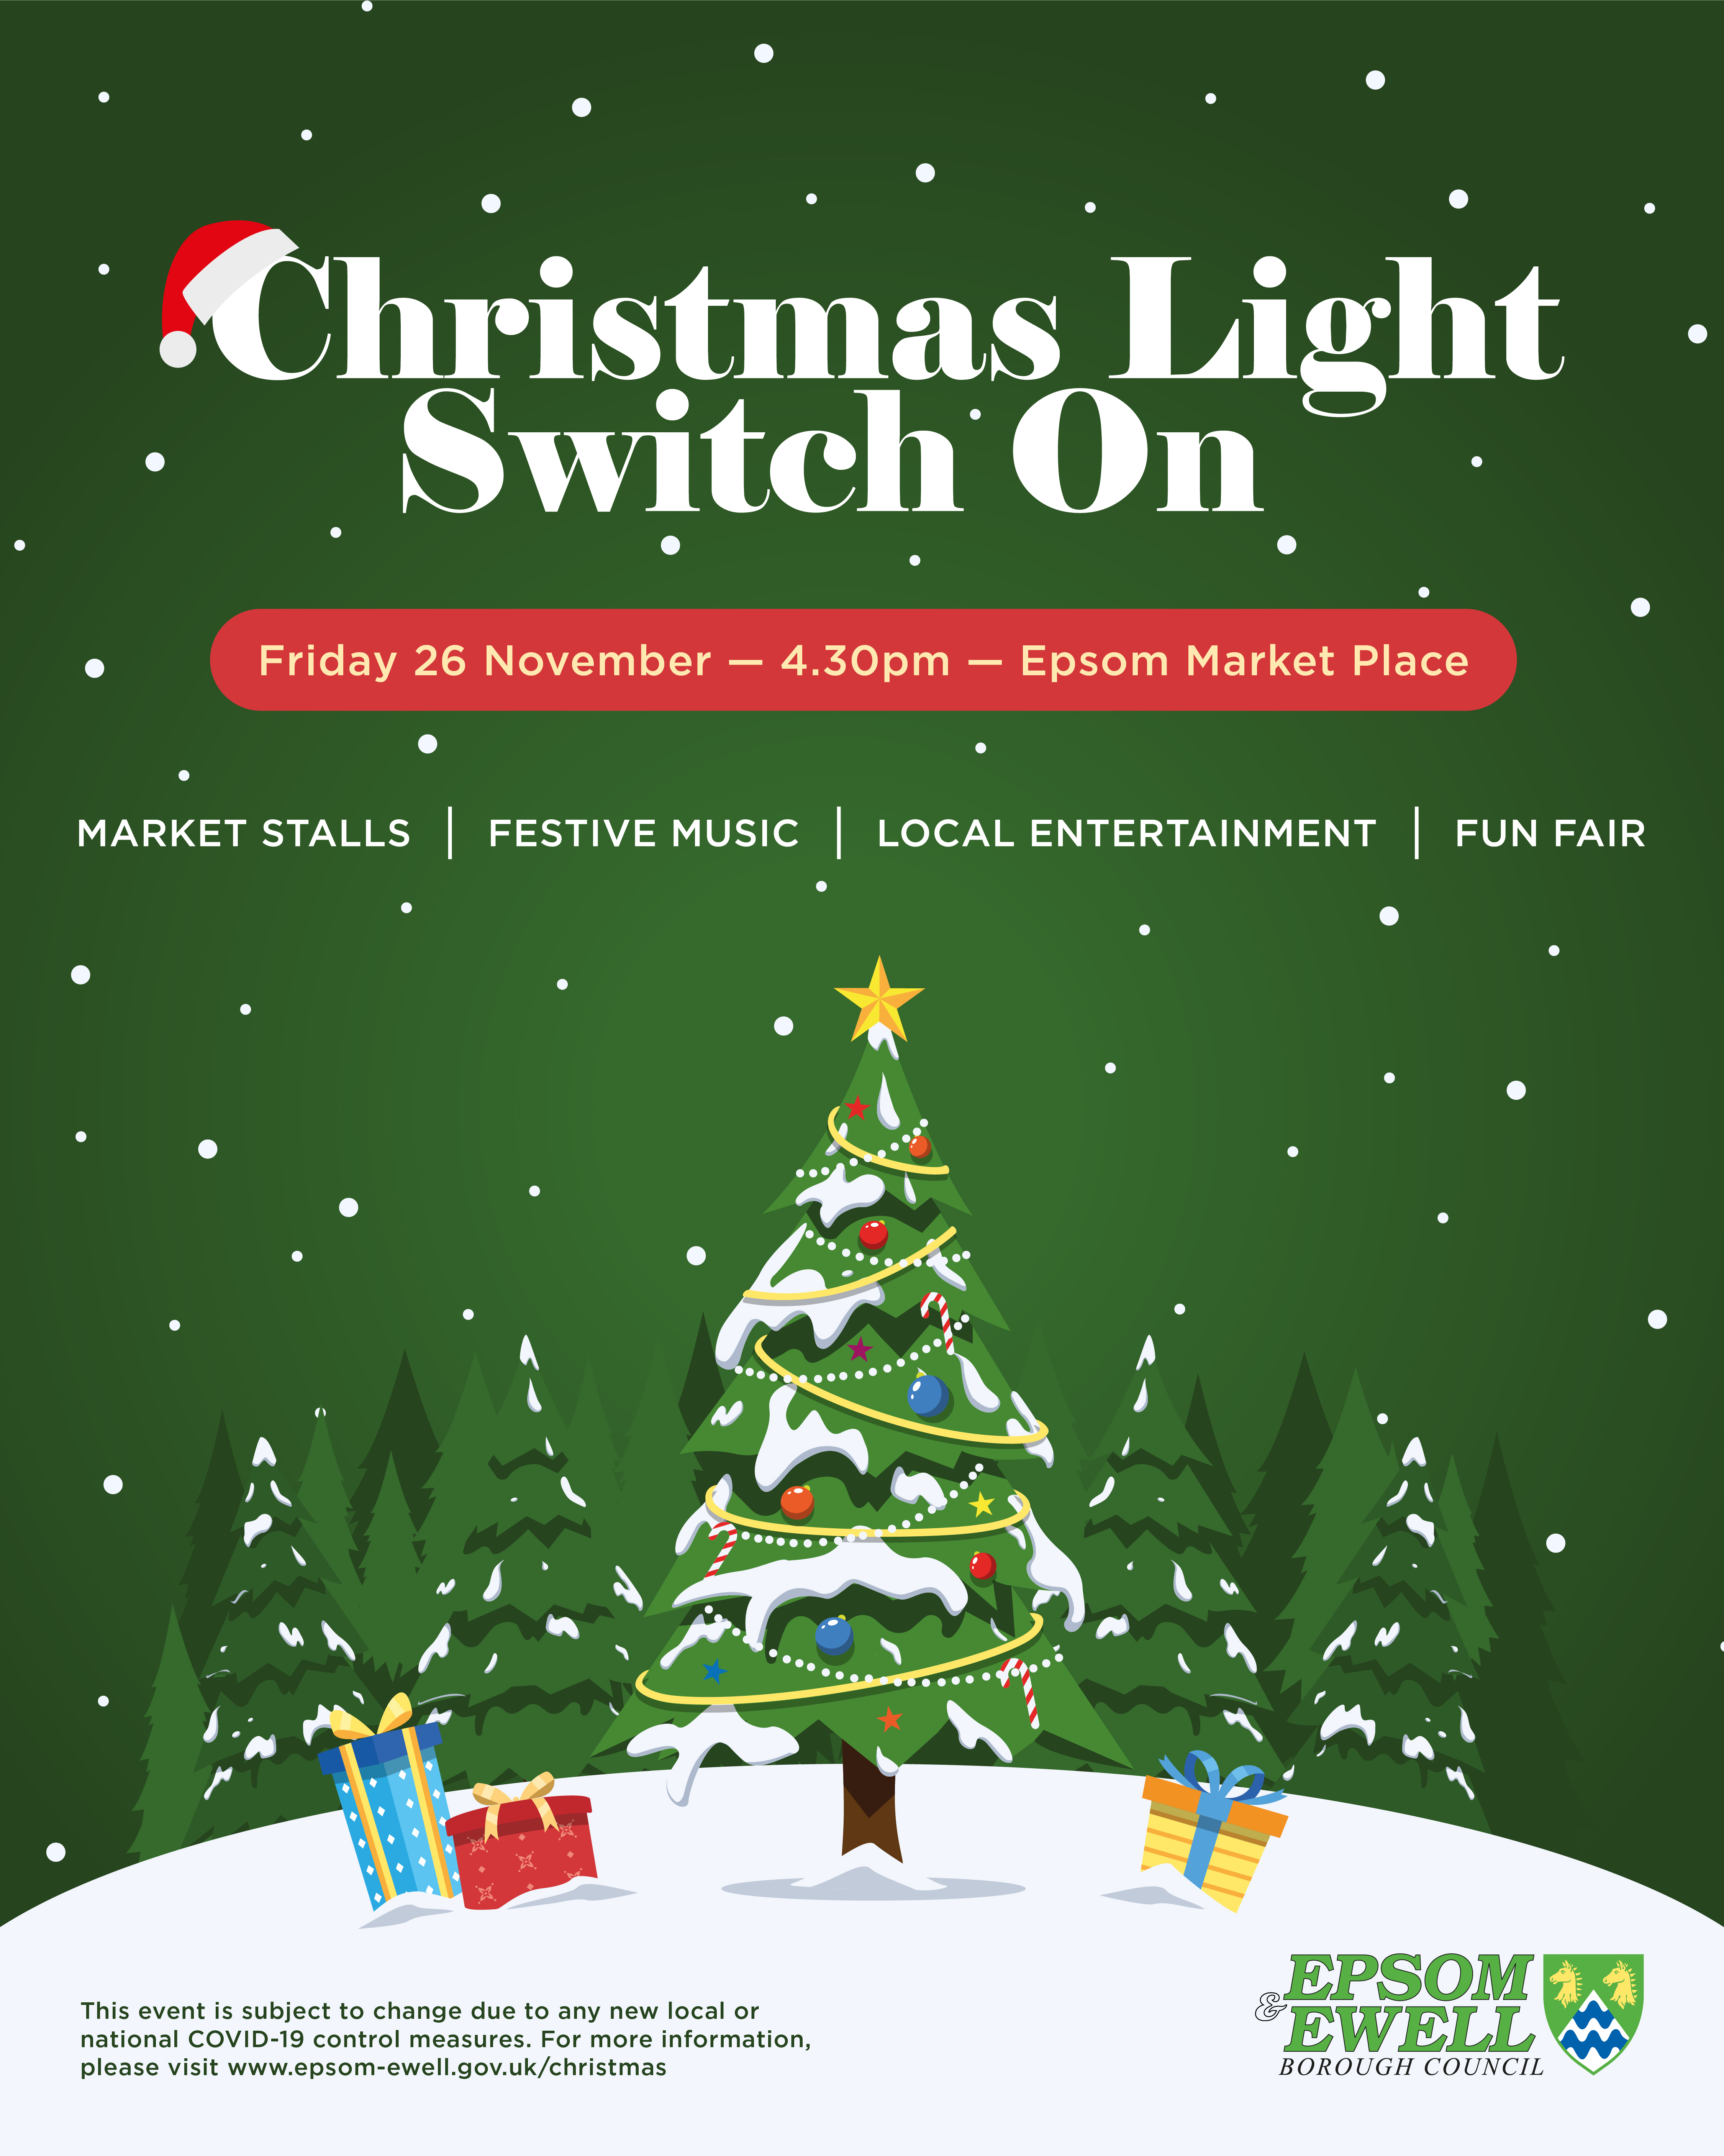 Epsom Christmas Light Switch On event